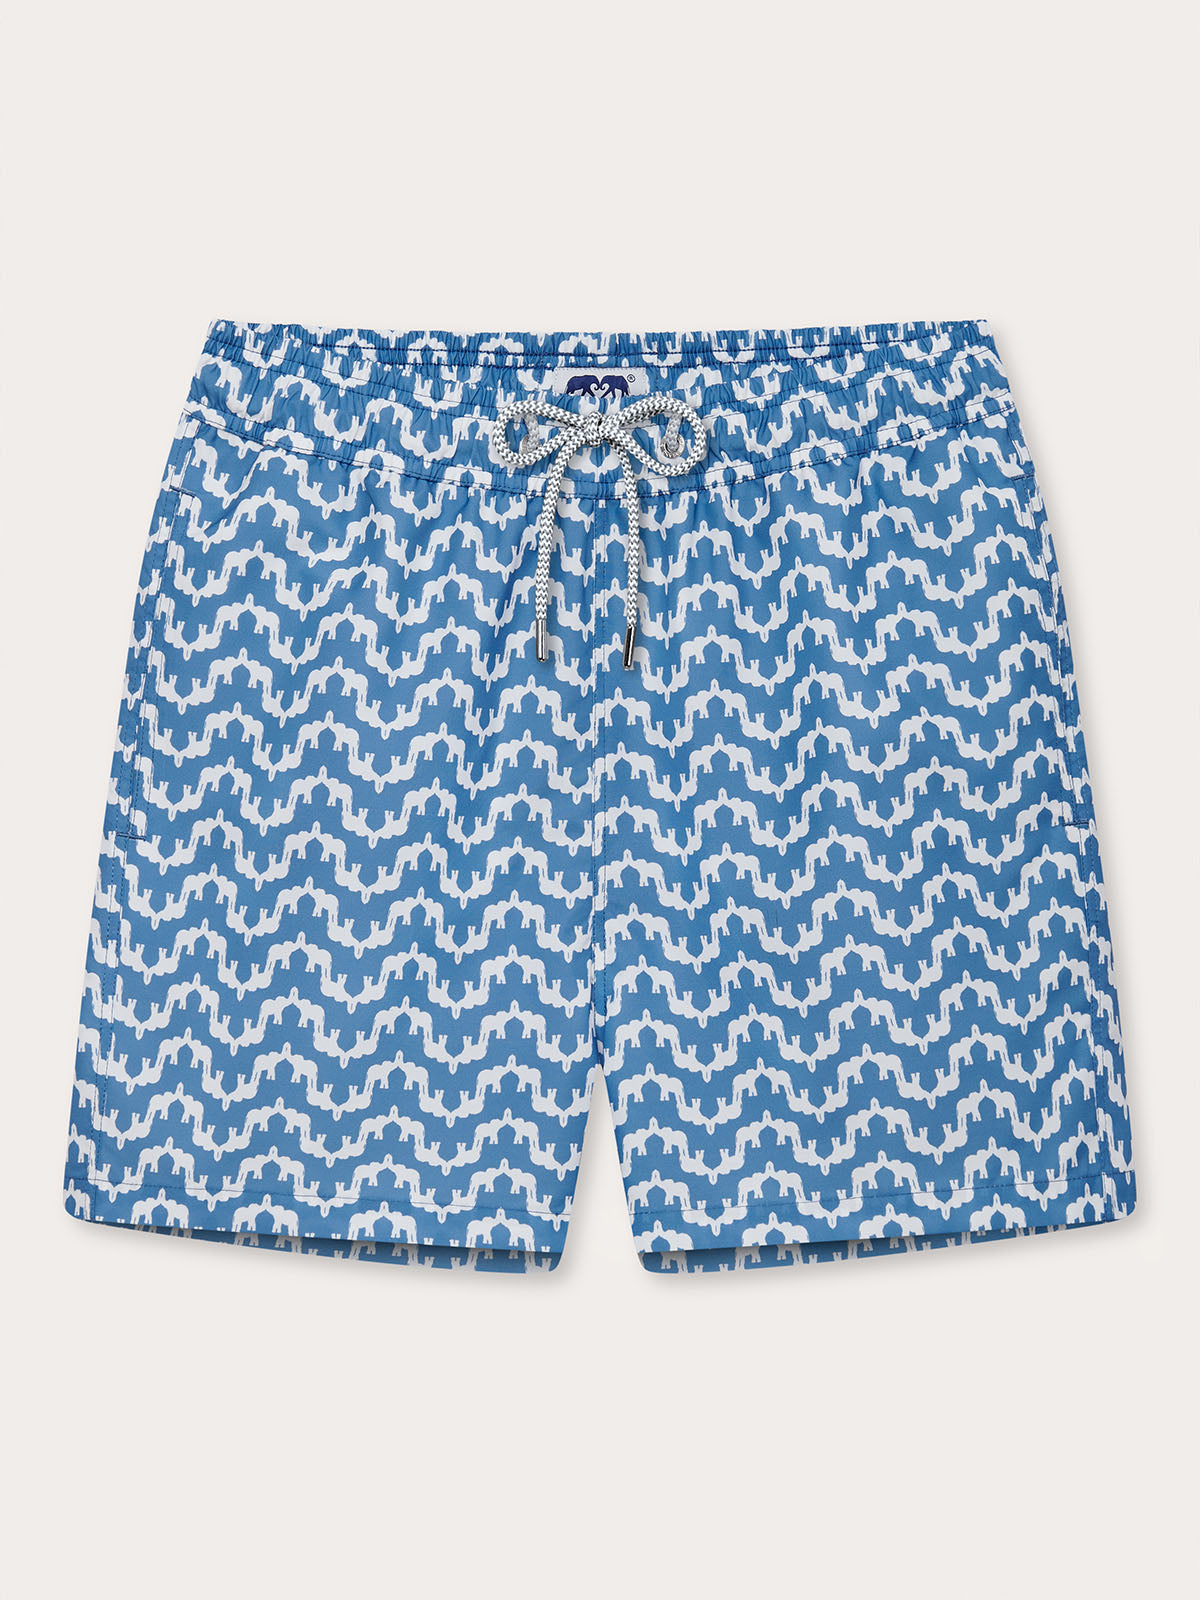 Men’s Elephant Palace Blue Staniel Swim Shorts